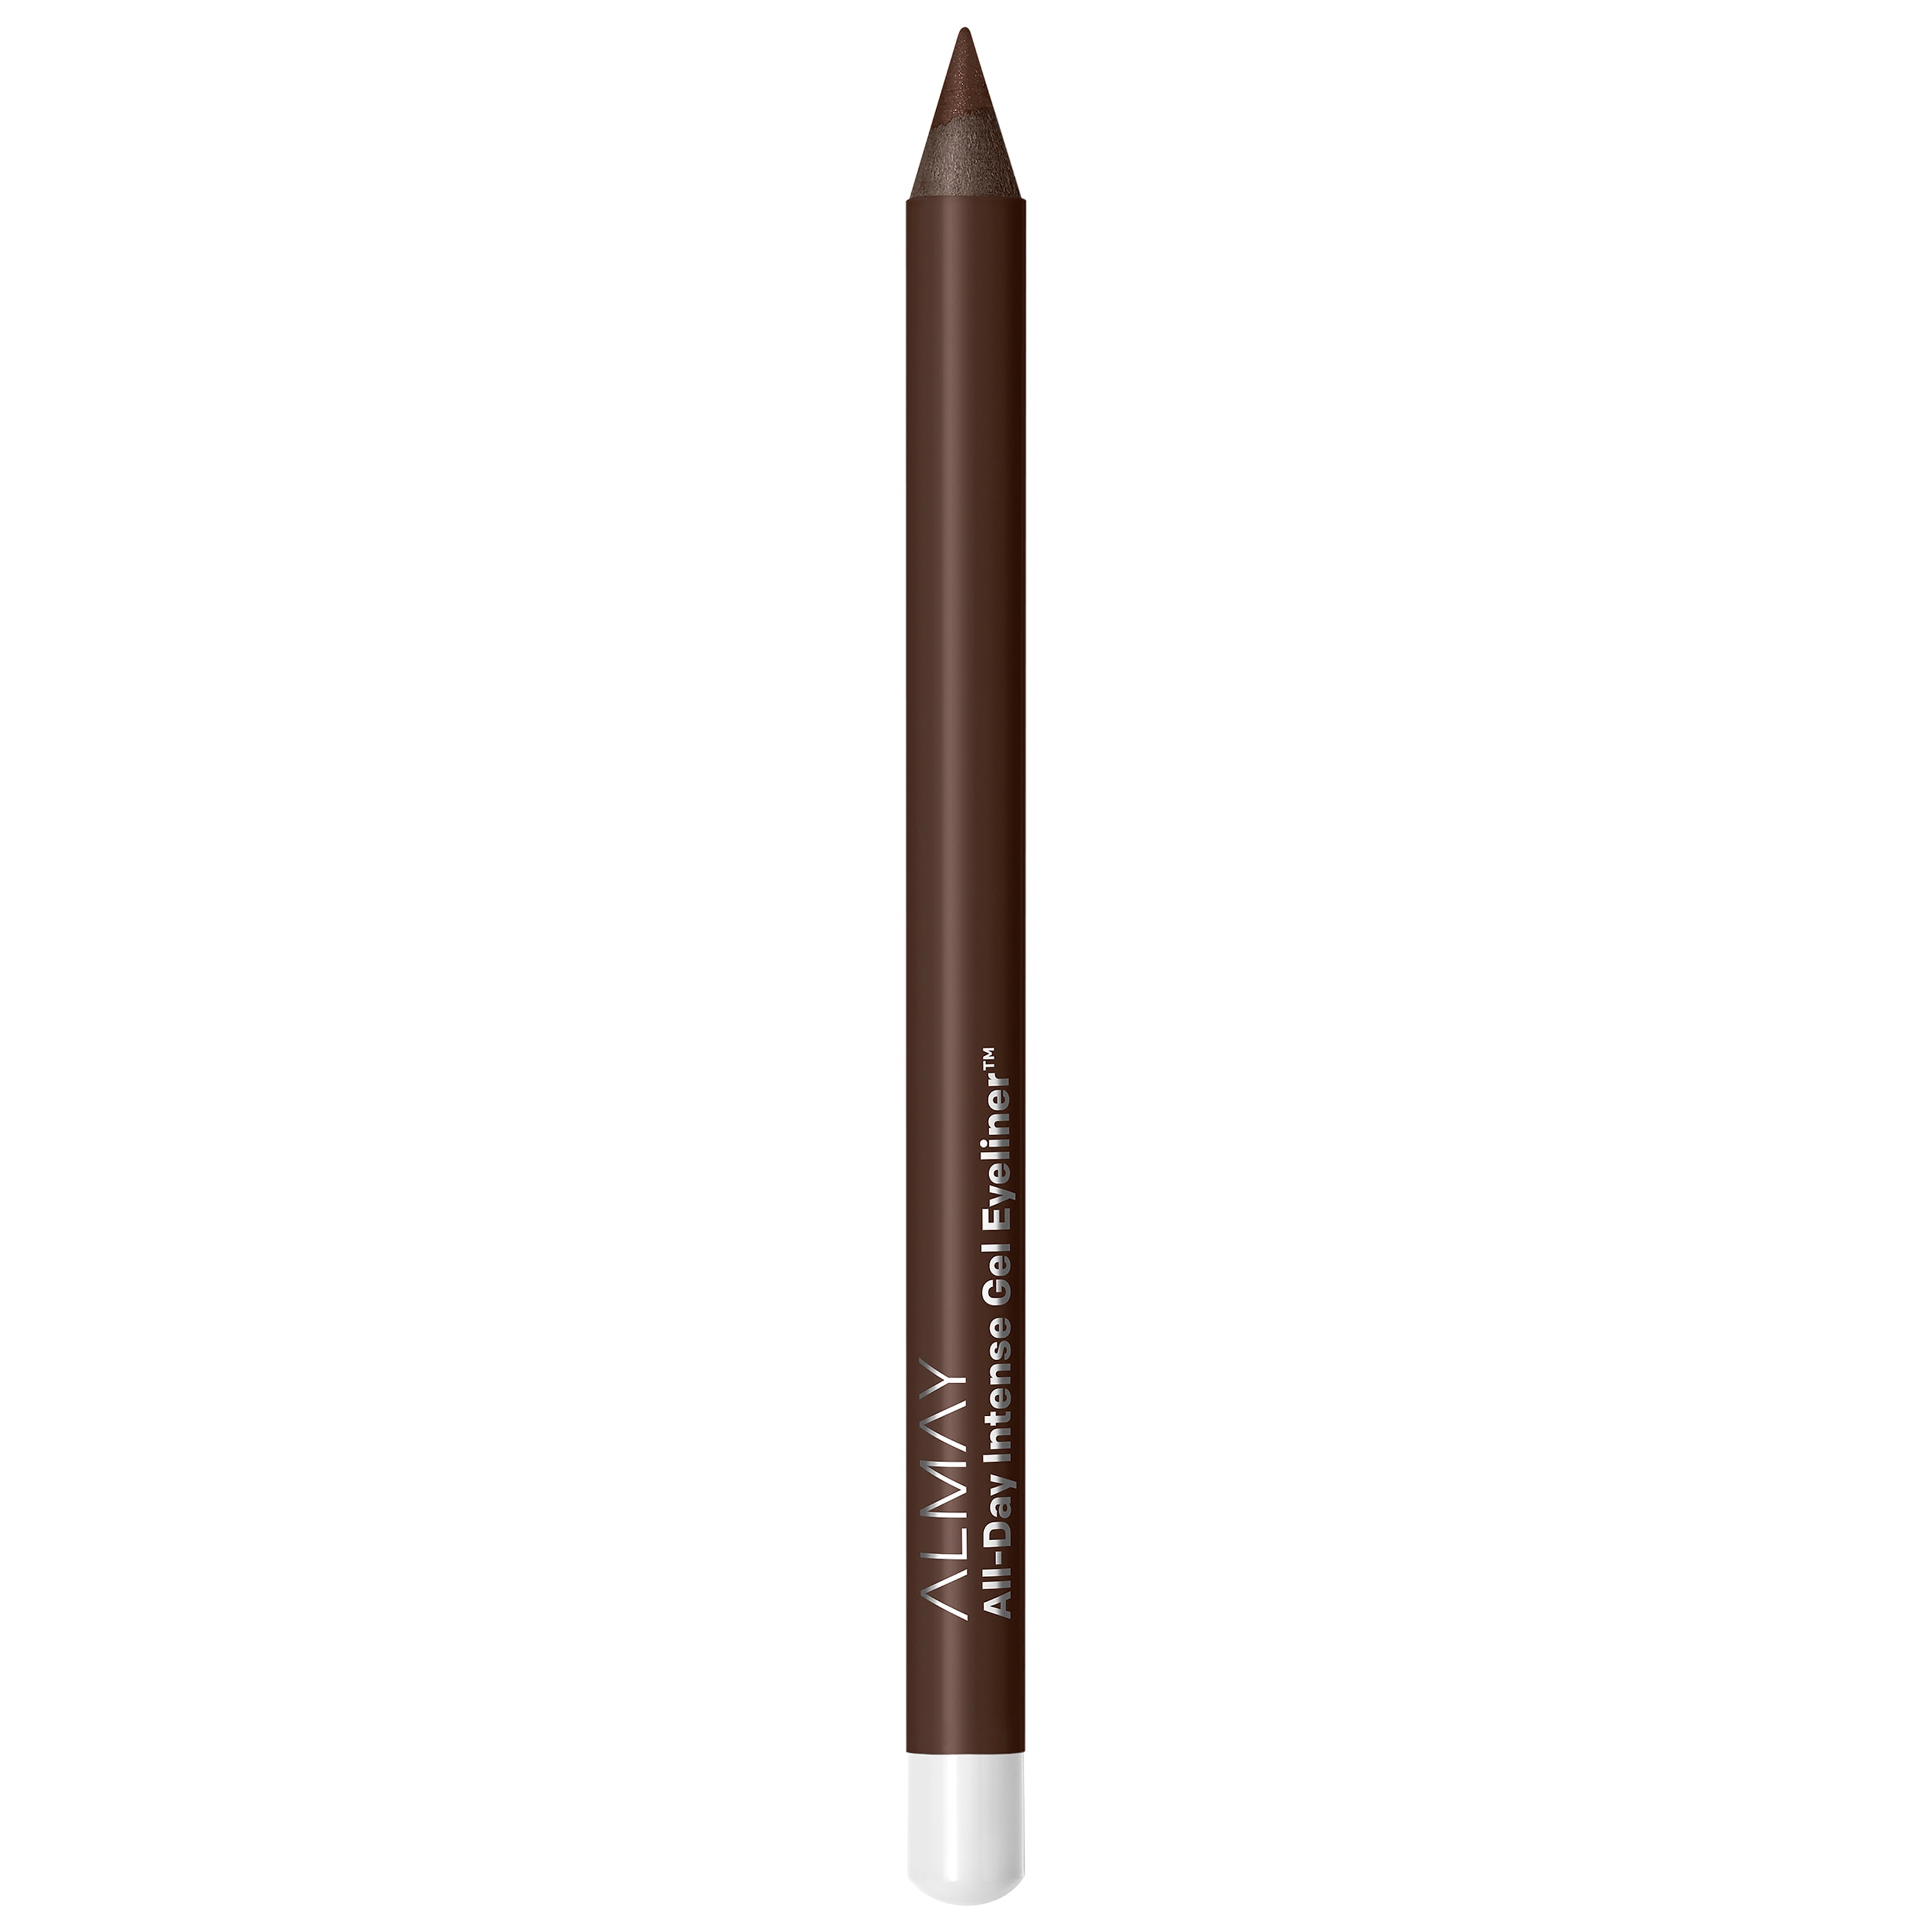 Almay All-Day Intense Gel Eyeliner, Longlasting, Waterproof, Fade-Proof Creamy High-Performing Easy-to-Sharpen Liner Pencil, 140 Deep Chestnut, 0.028 oz.